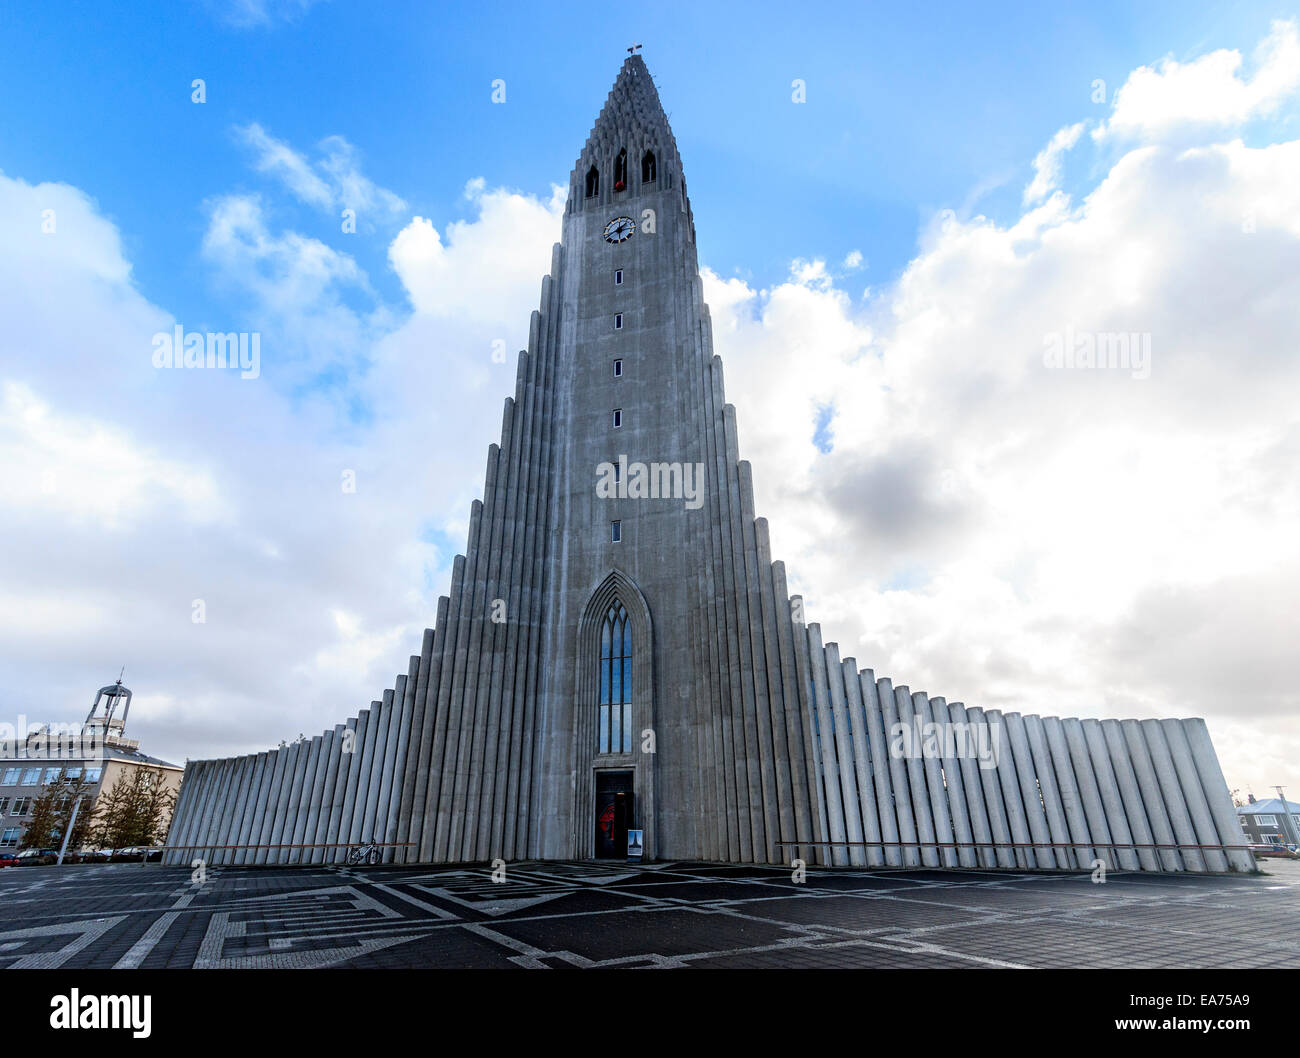 Hallgrímskirkja, an iconic landmark Lutheran parish church in Reykjavík, Iceland. Stock Photo